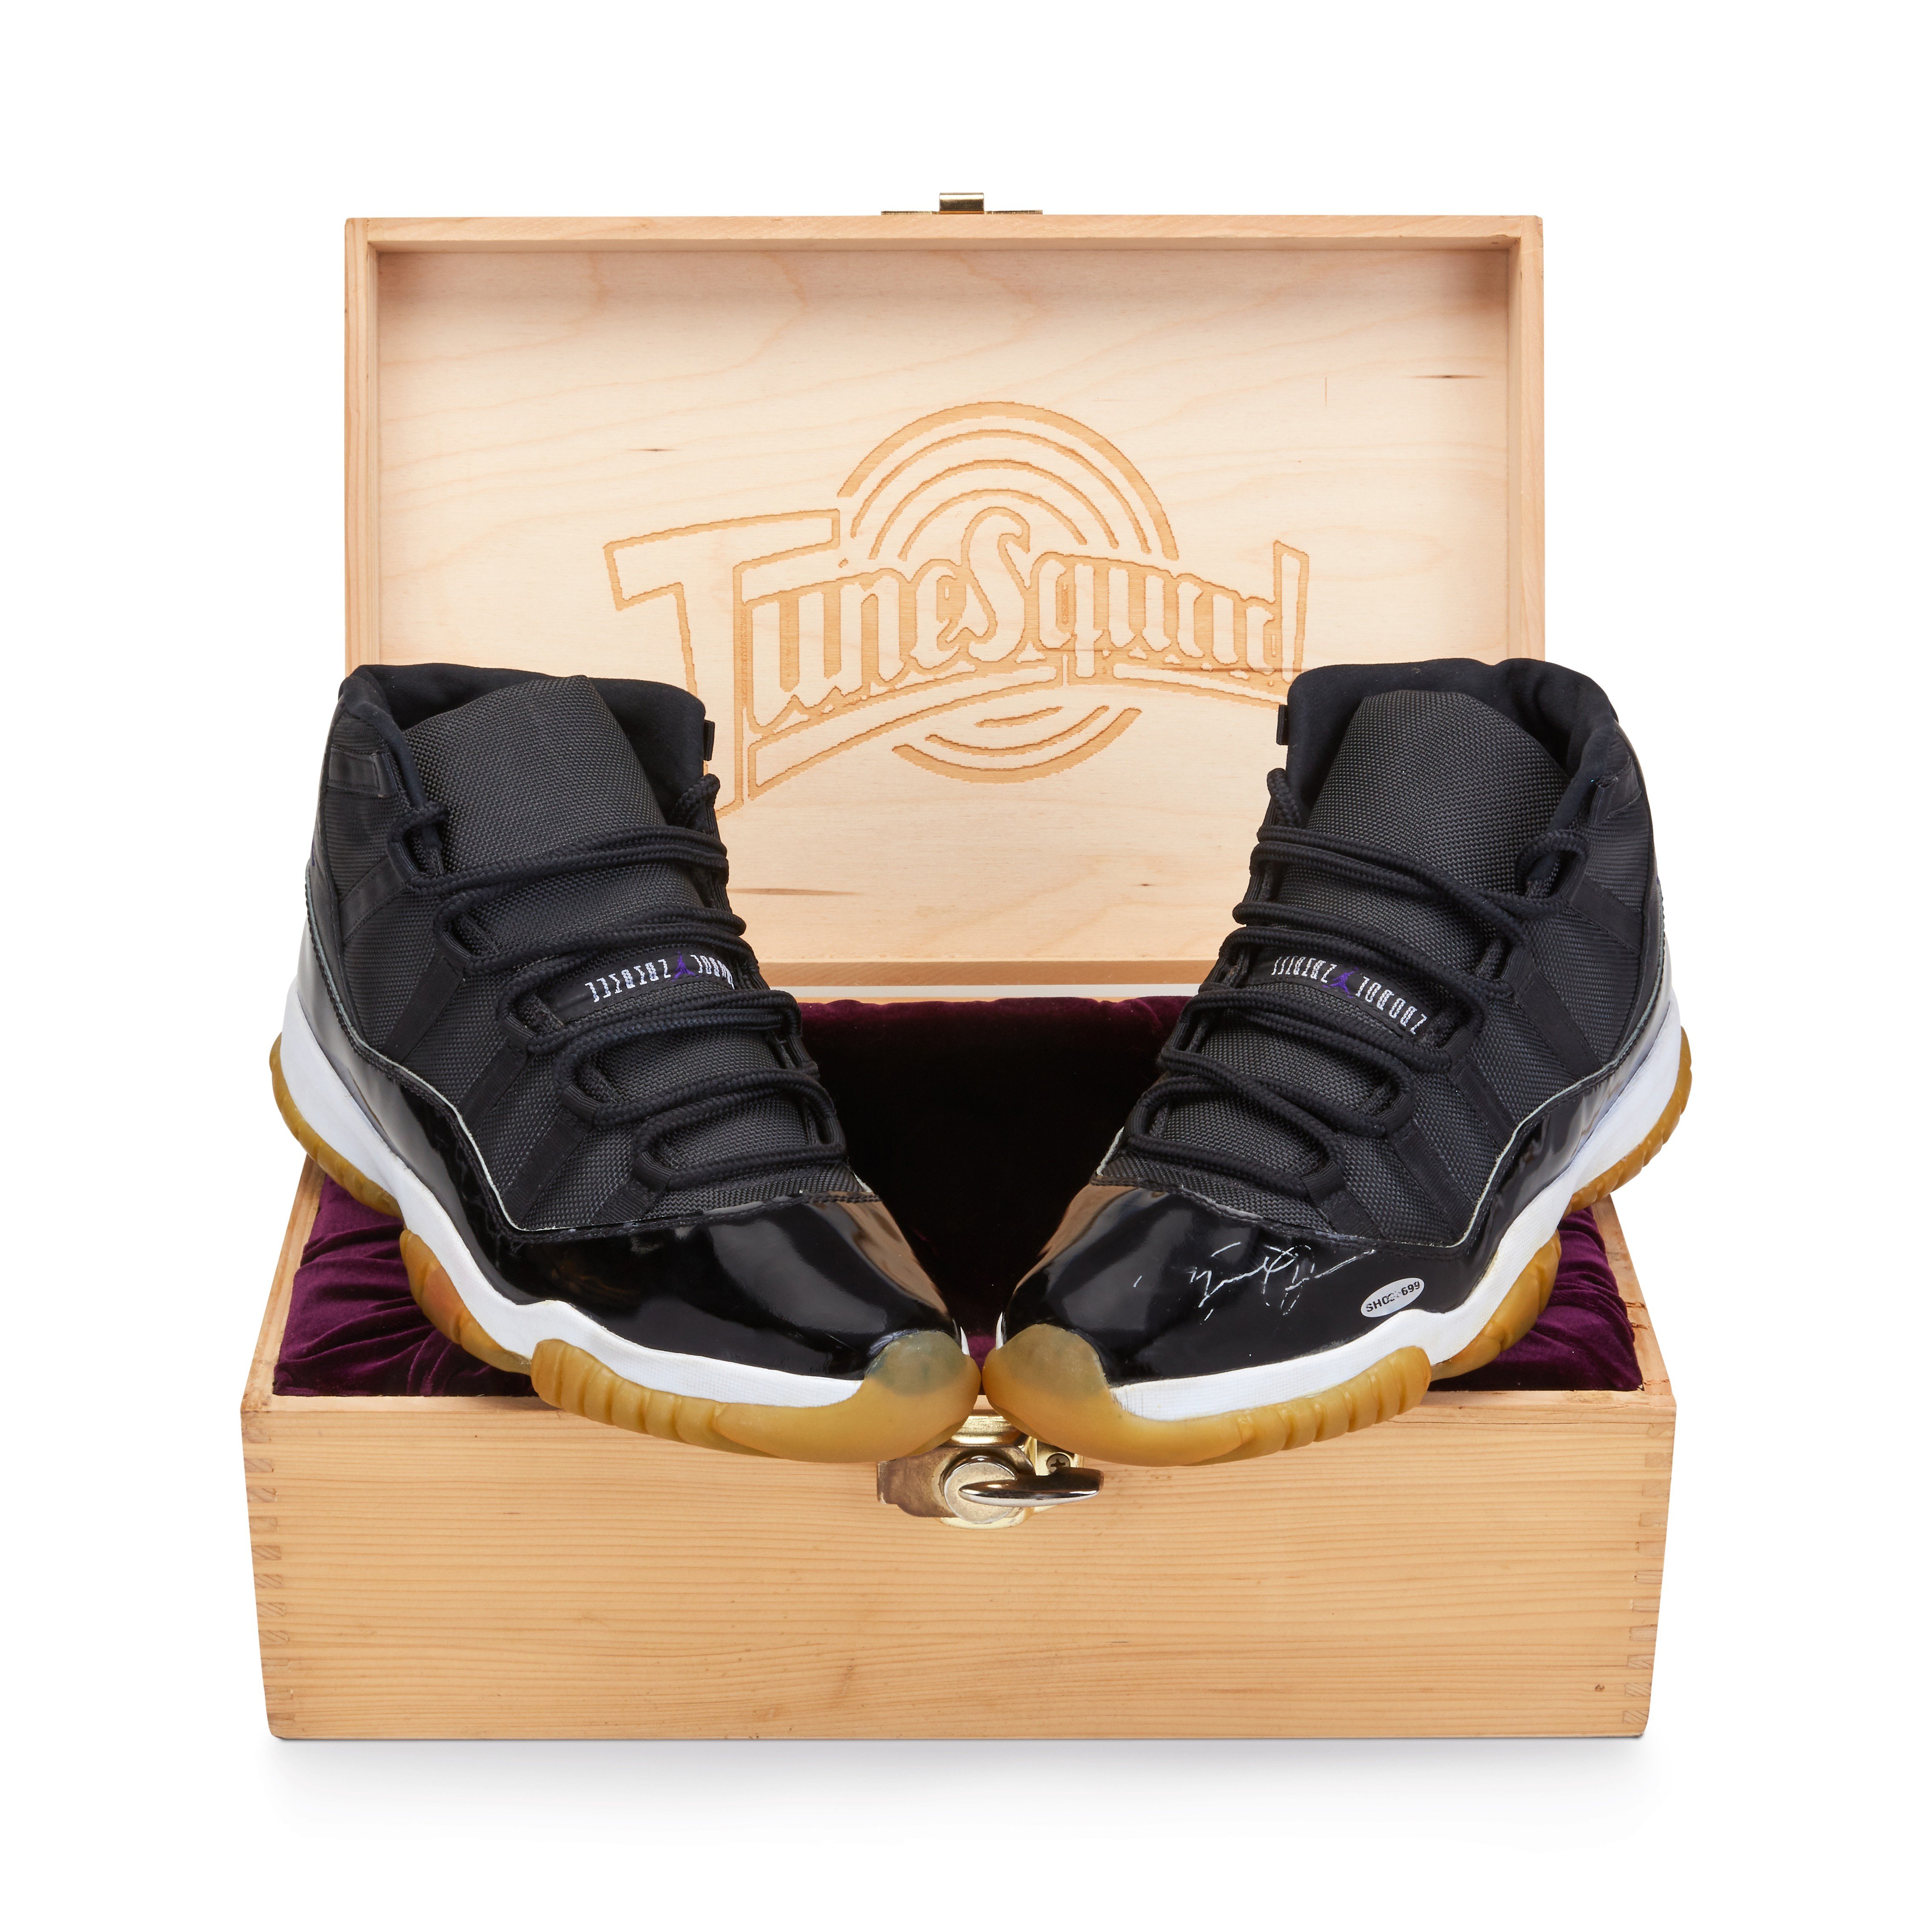 Michael Jordan's Signature Air Jordan Shoes From 1985 Sell For